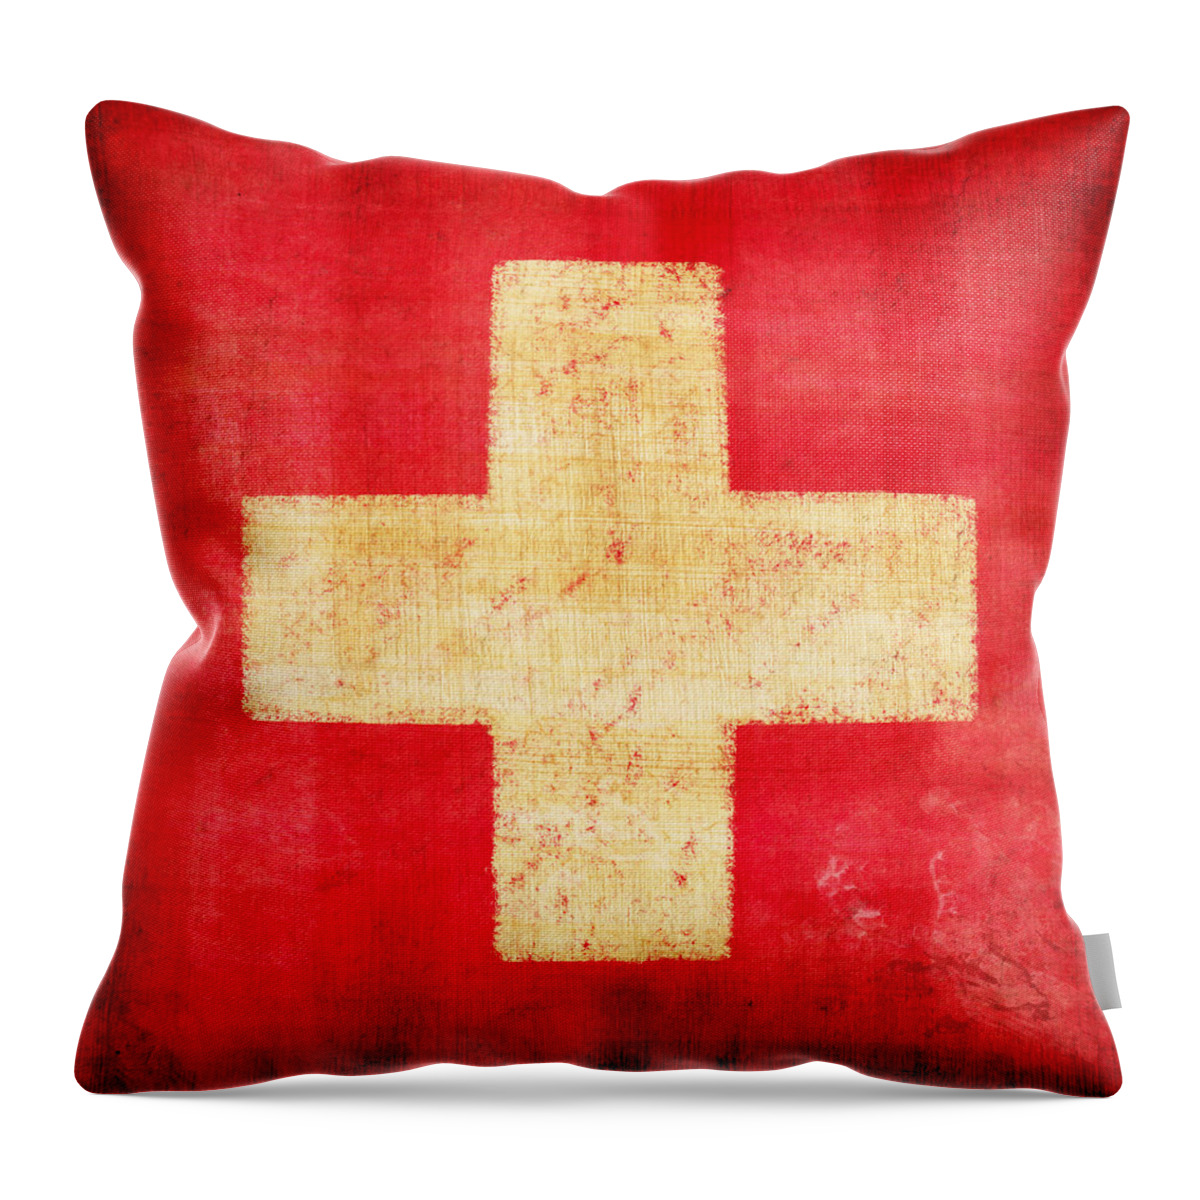 Abstract Throw Pillow featuring the photograph Switzerland flag by Setsiri Silapasuwanchai